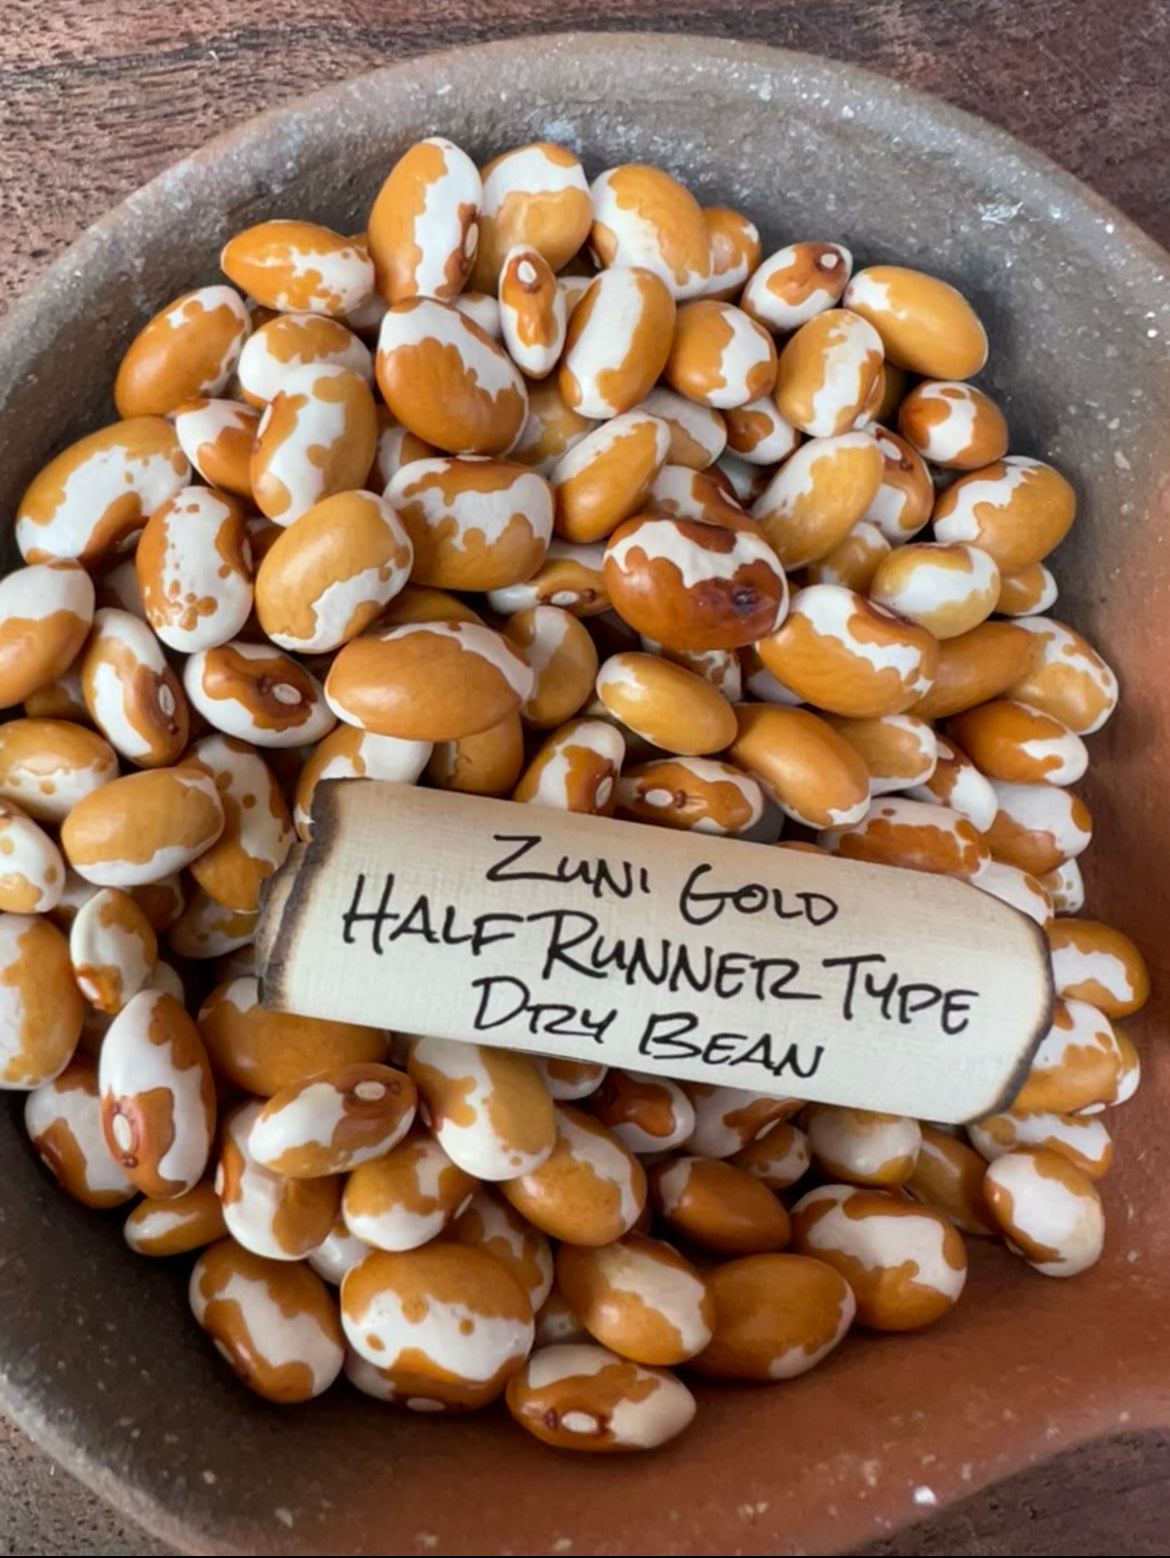 Zuni Gold, Half-Runner Dry Bean